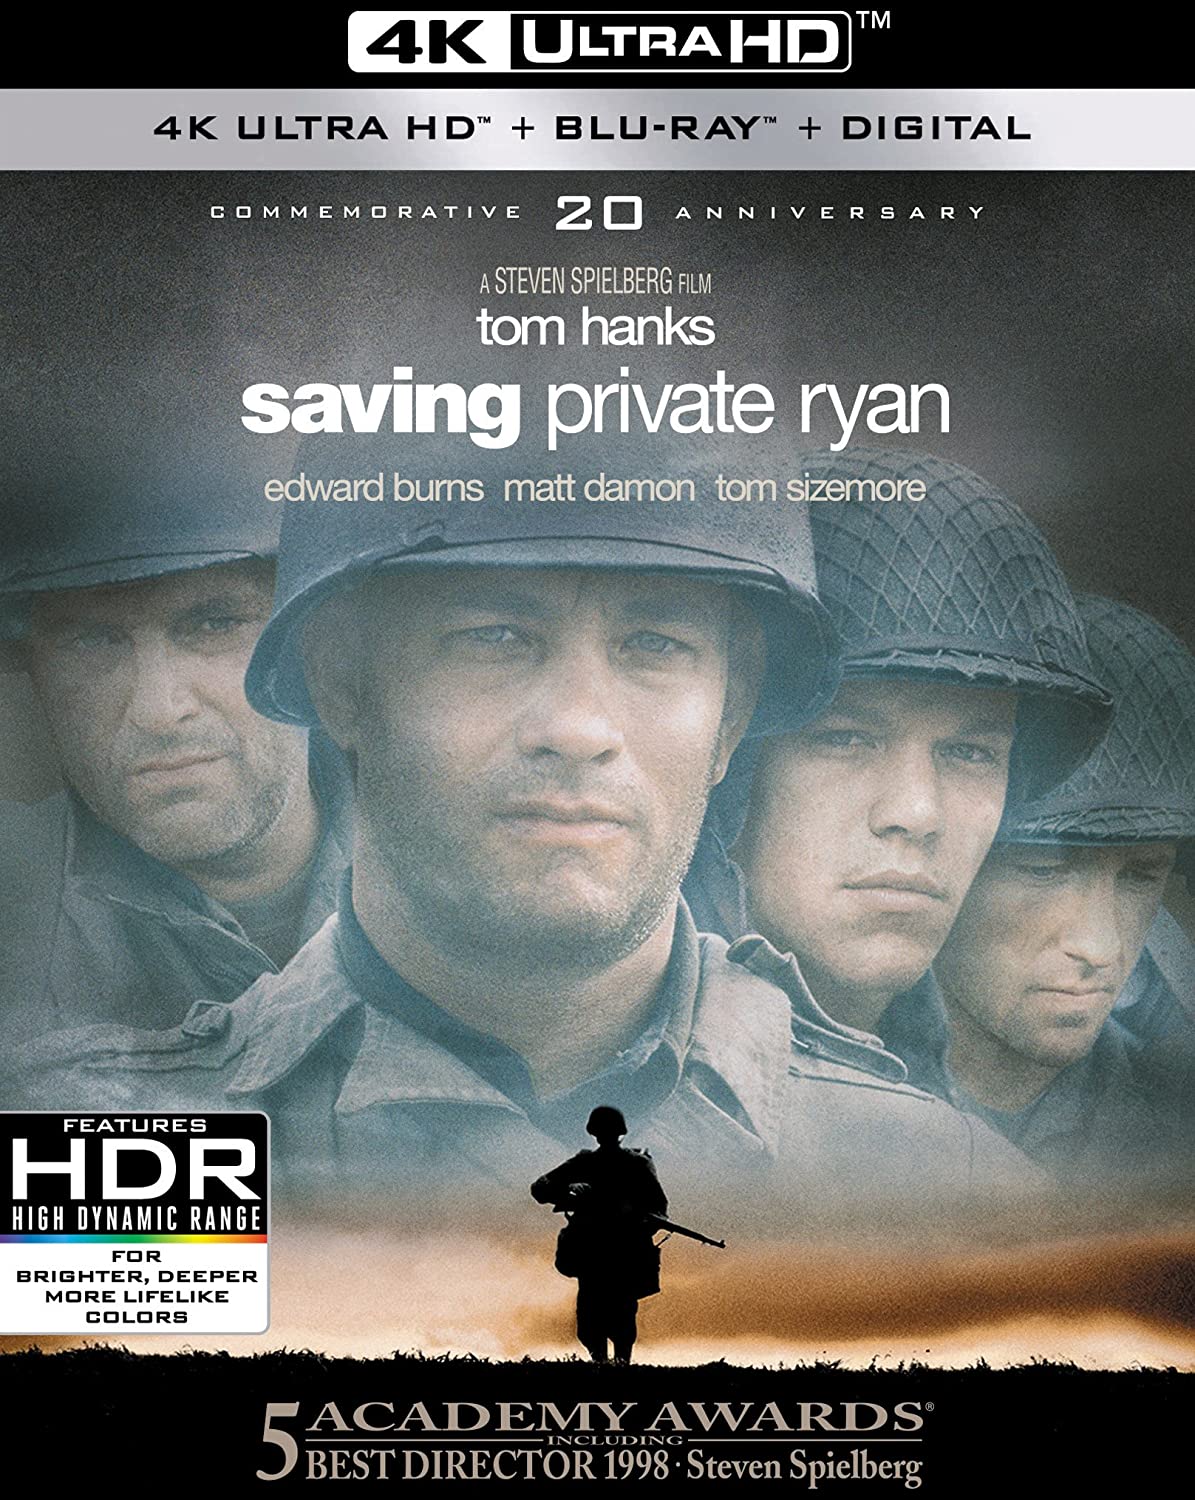 Saving Private Ryan [Blu-ray] [4K UHD] [Digital] $14.39 at Amazon